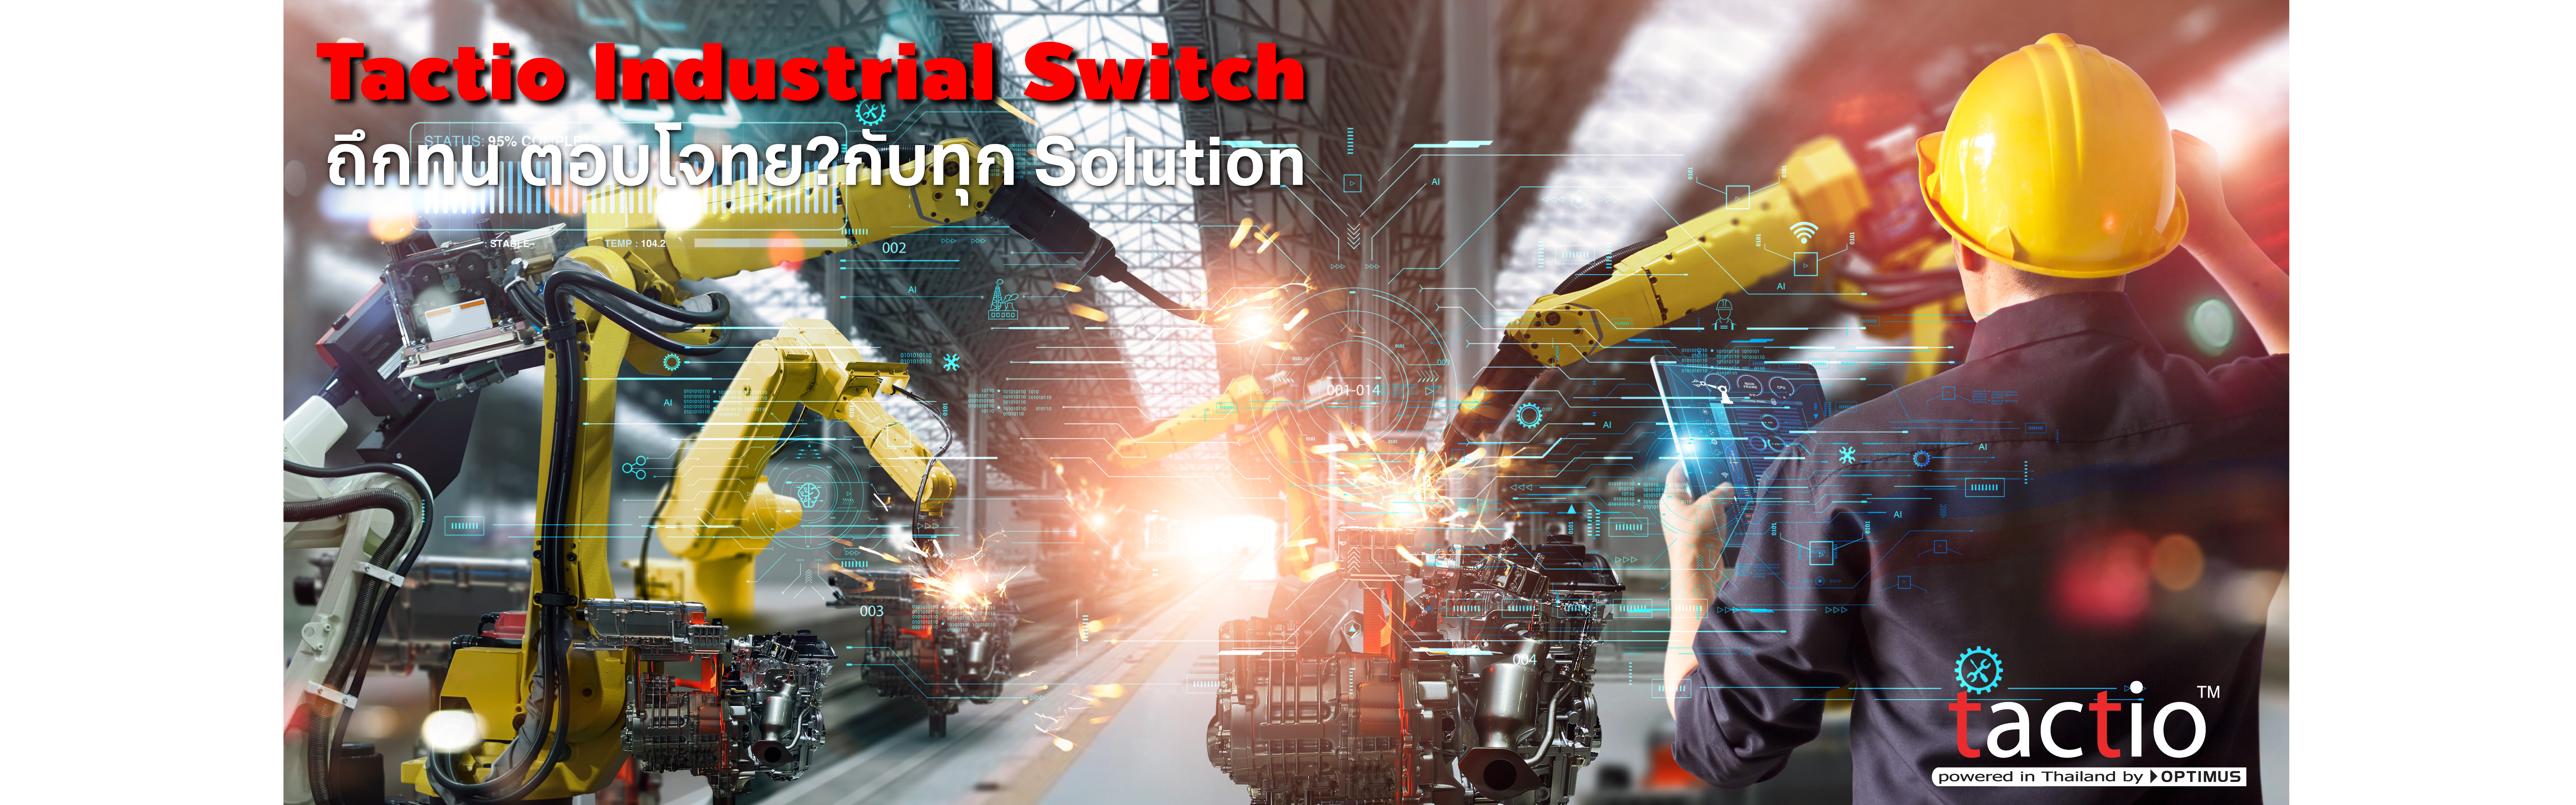 Tactio Network Switch ถึกทน ตอบโจทย์ทุก Solution